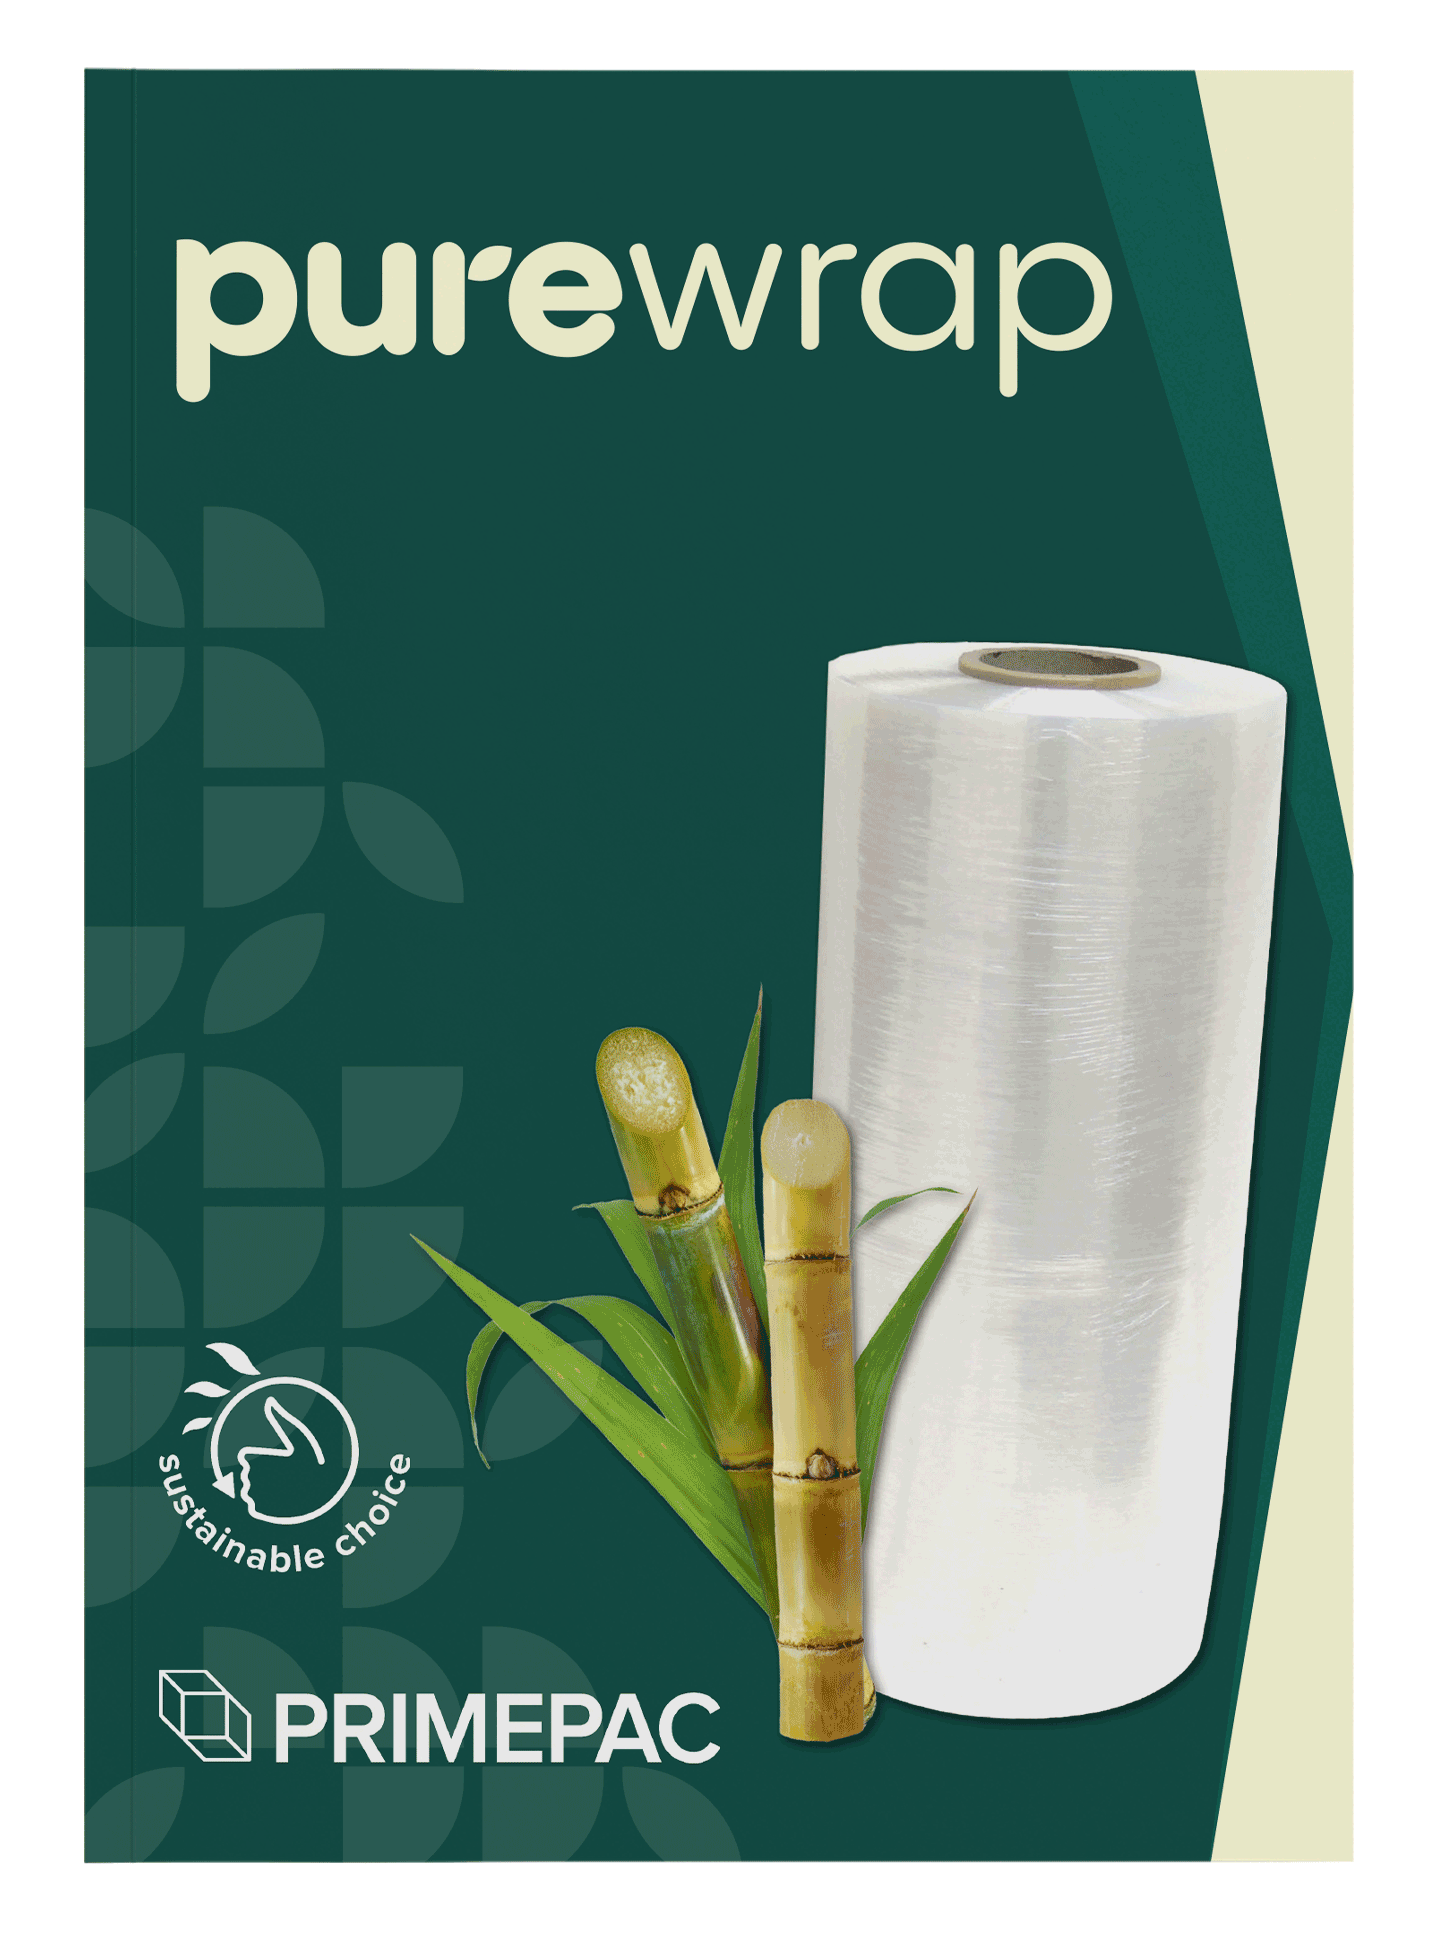 Purewrap catalogue